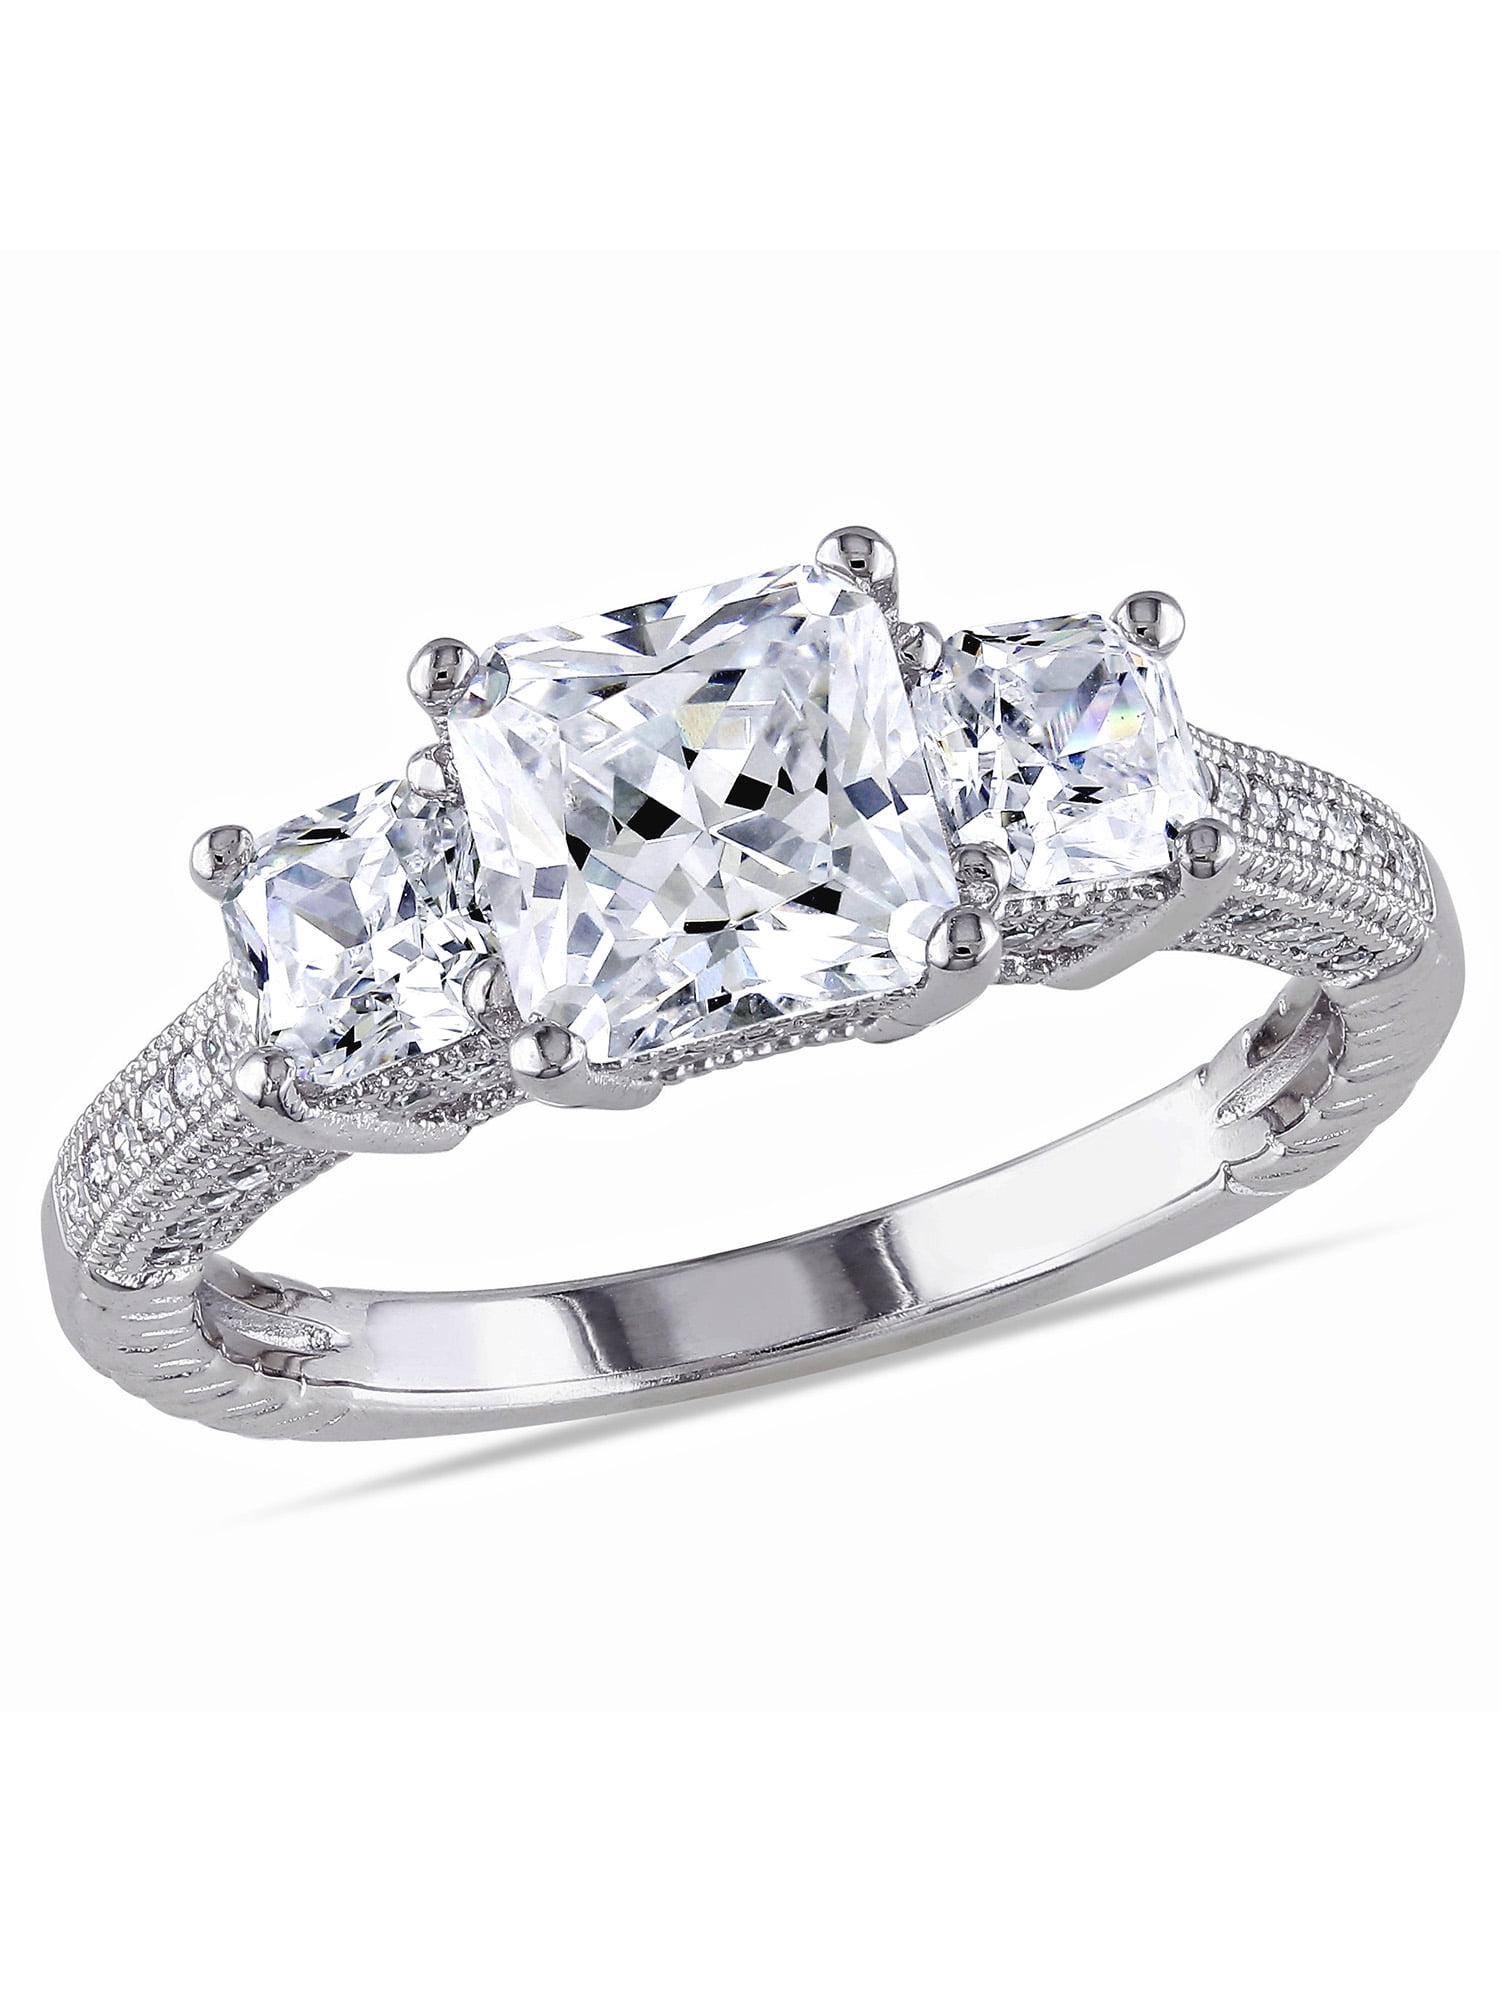 Details about   Natural Trillion 1.5 Ctw Cubic Zirconia Gemstone 925 Silver Women Wedding Ring